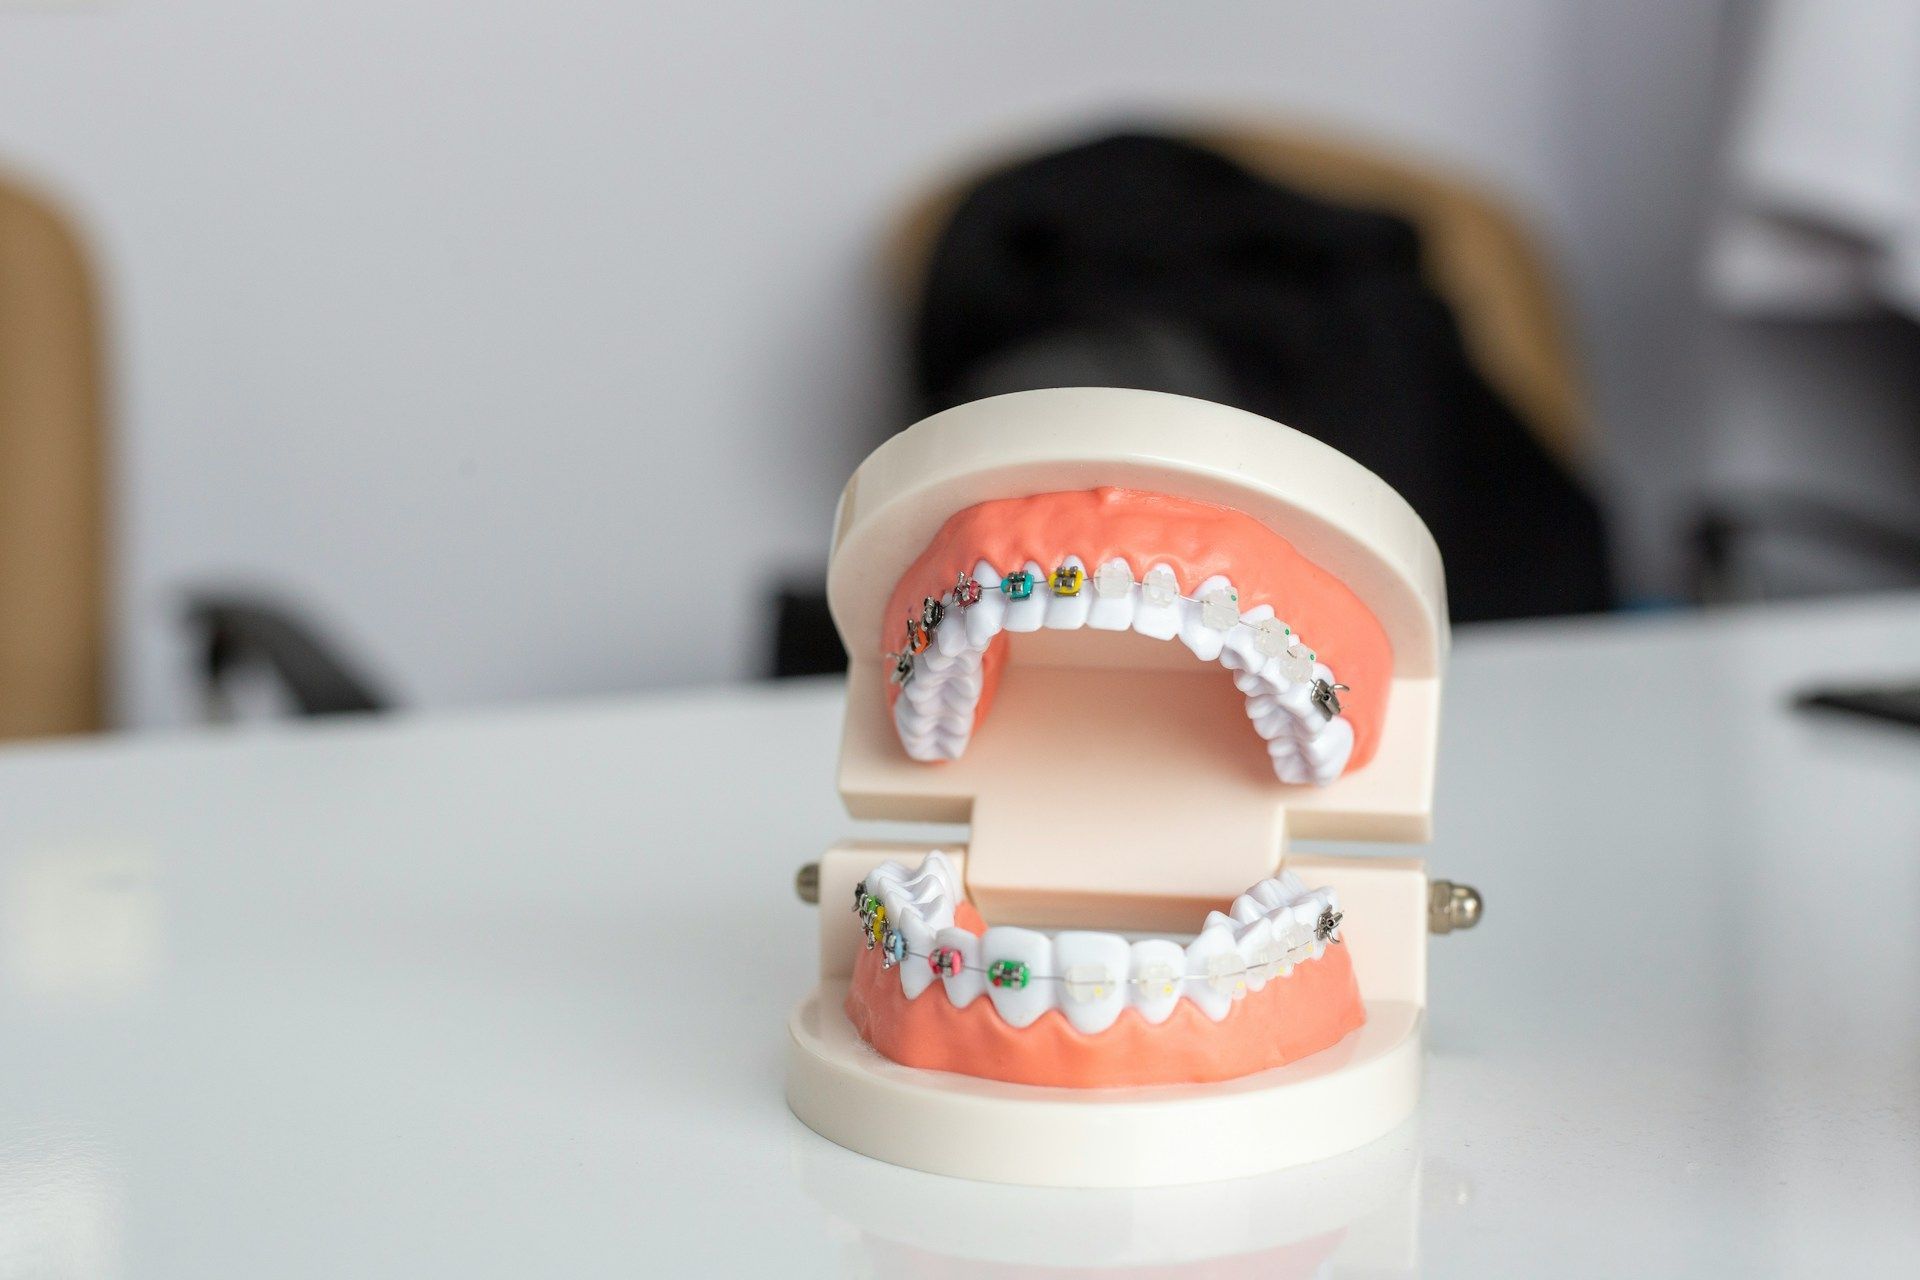 3d teeth model